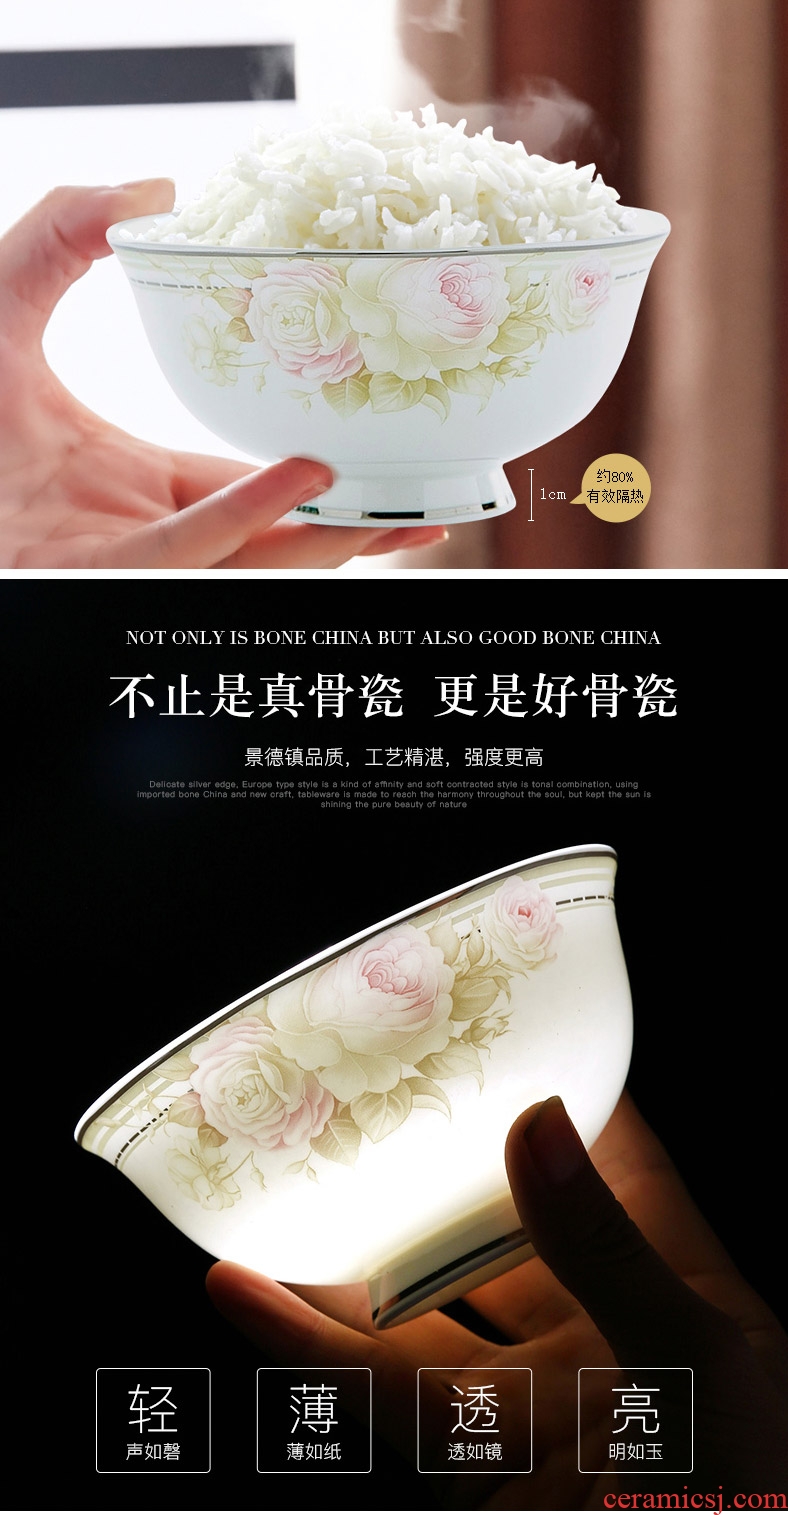 Jingdezhen ceramic tableware kit web celebrity home eat bowl individuality creative set bowl dish dish rainbow noodle bowl small bowl of soup bowl